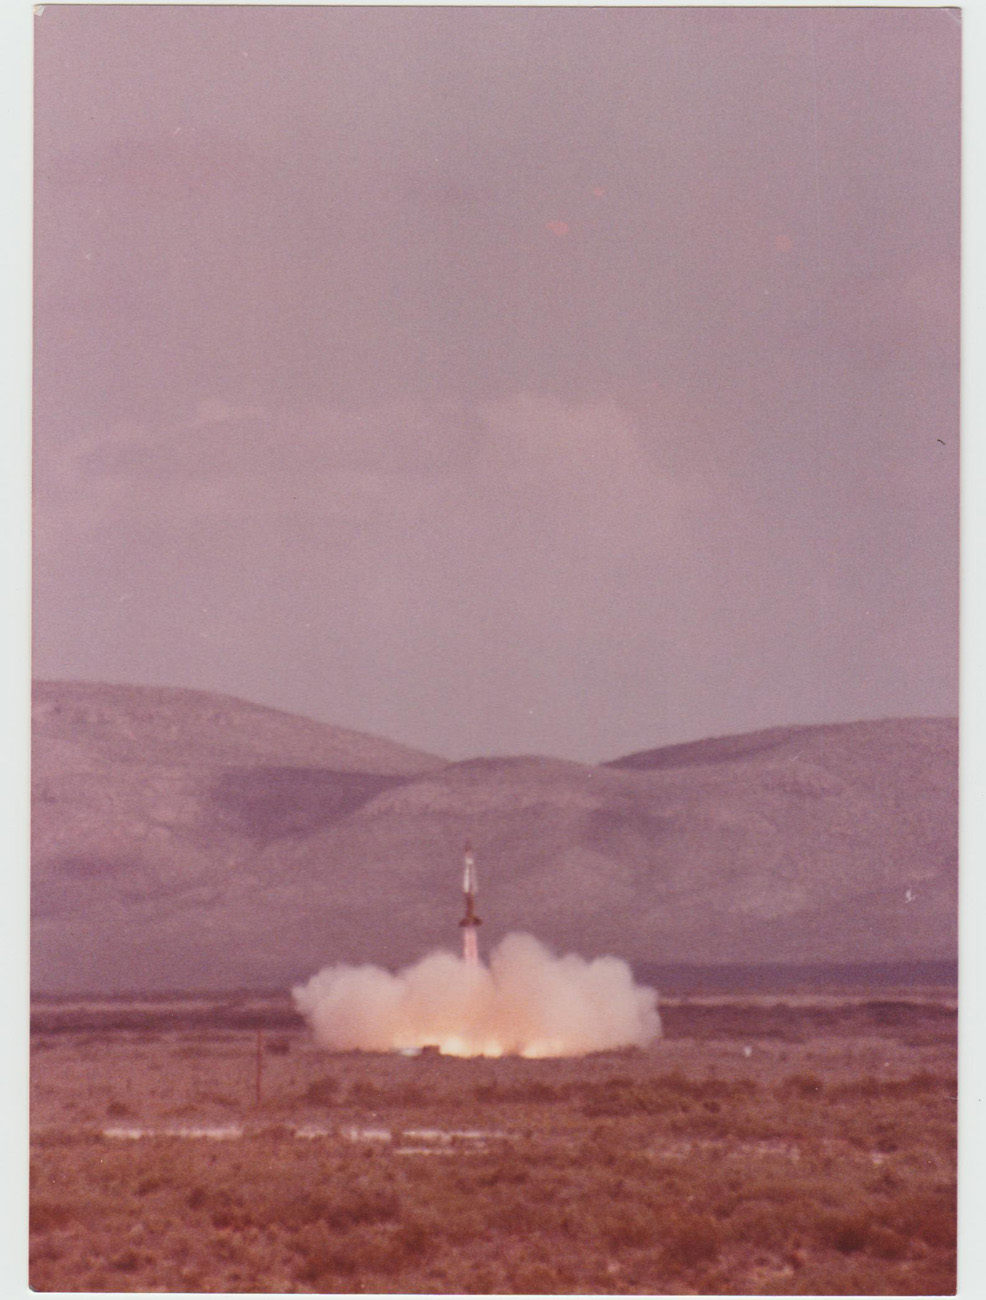 Hercules ascending after launch August 1977 at McGregor Range